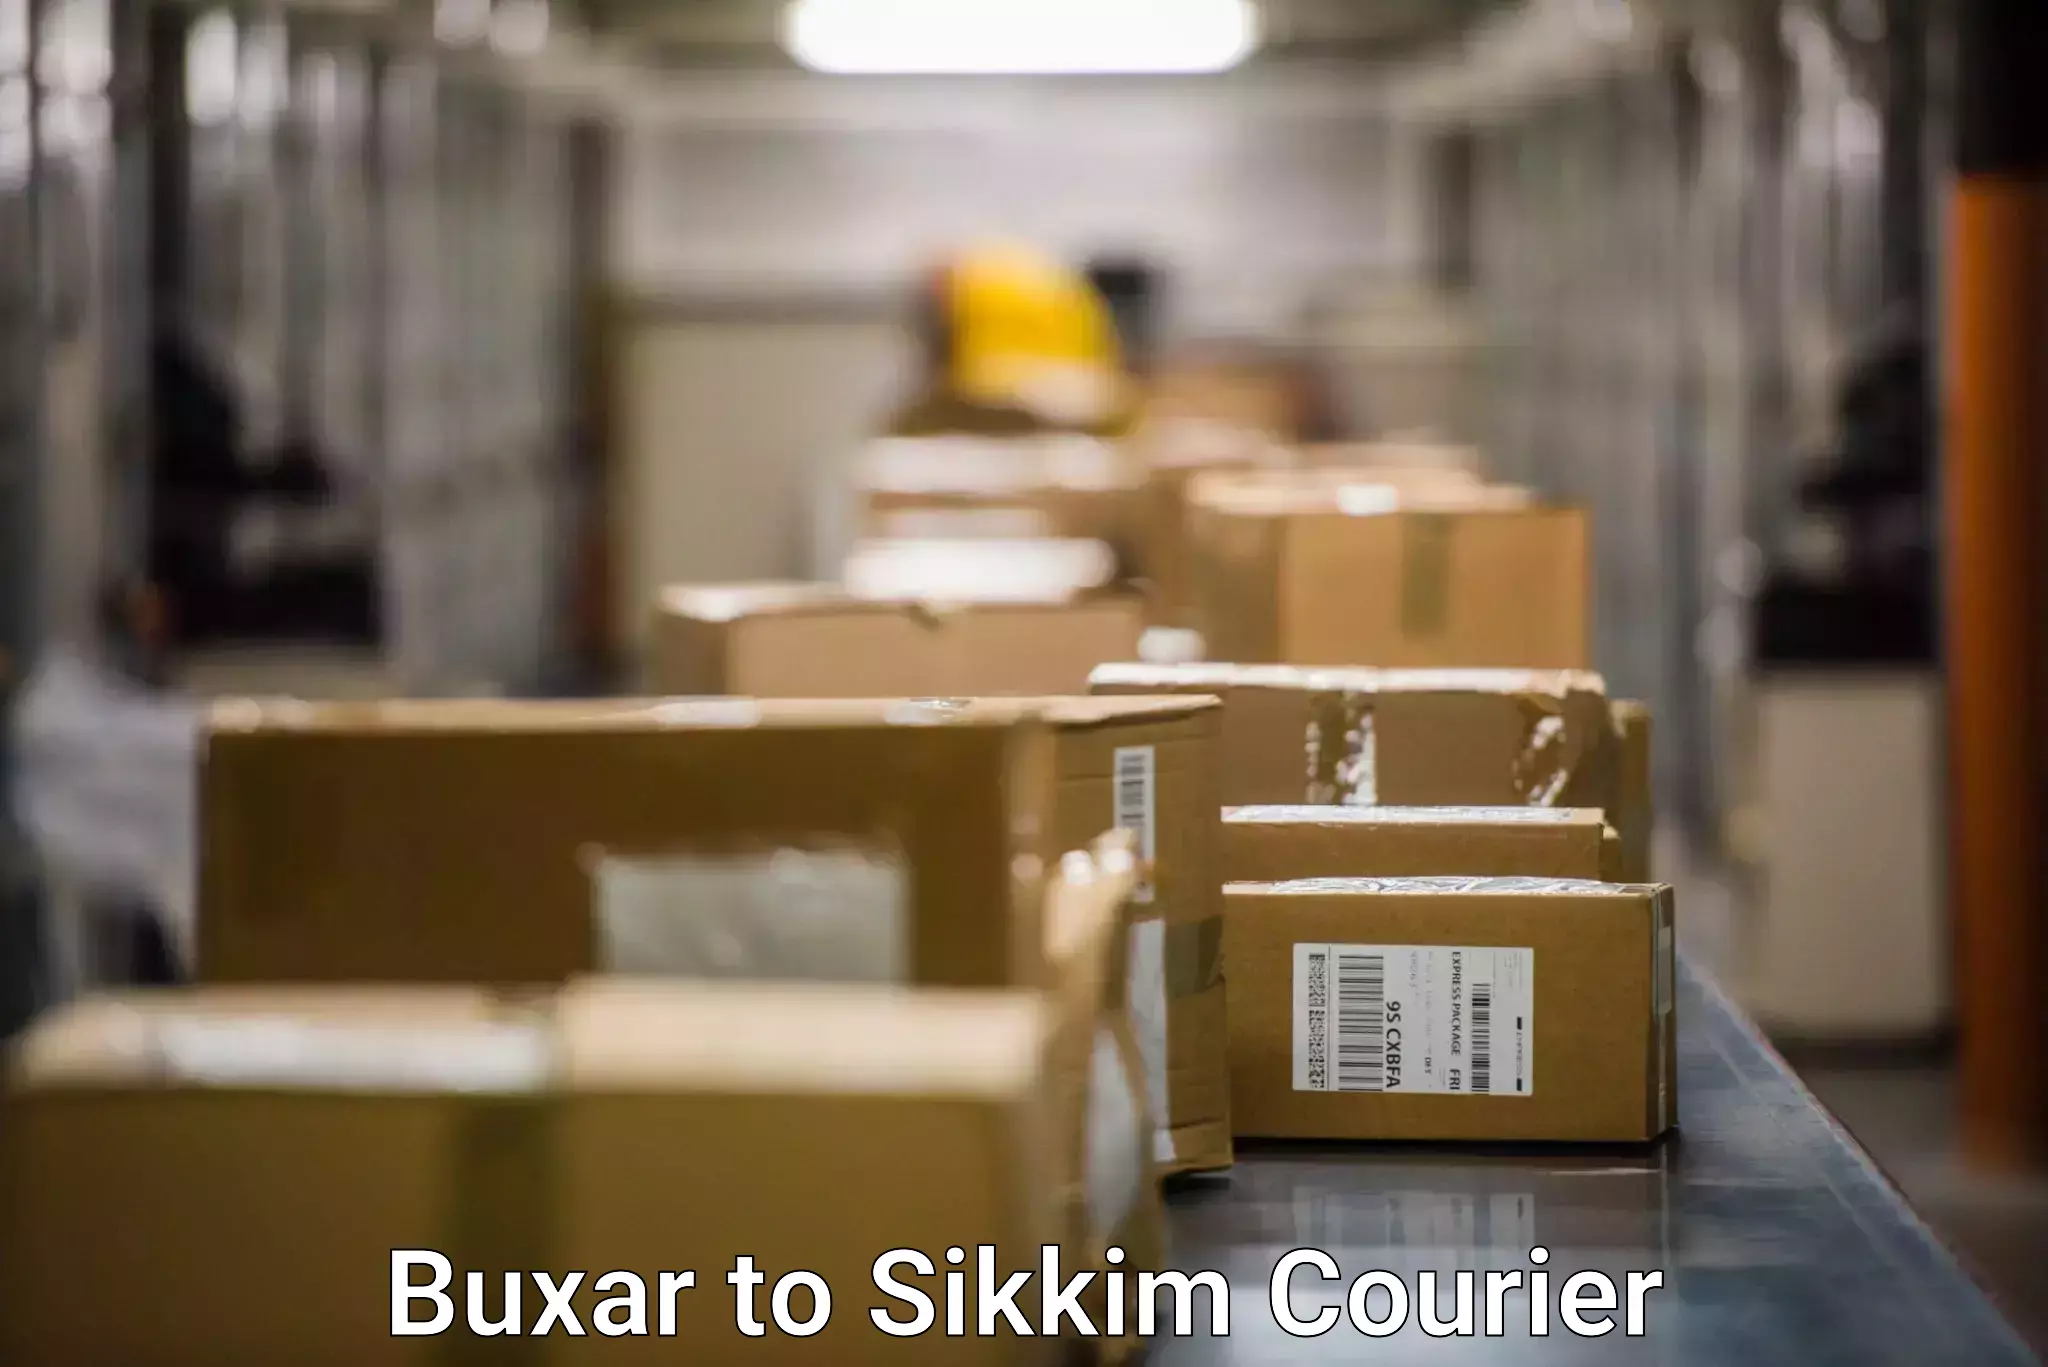 International parcel service Buxar to Pelling